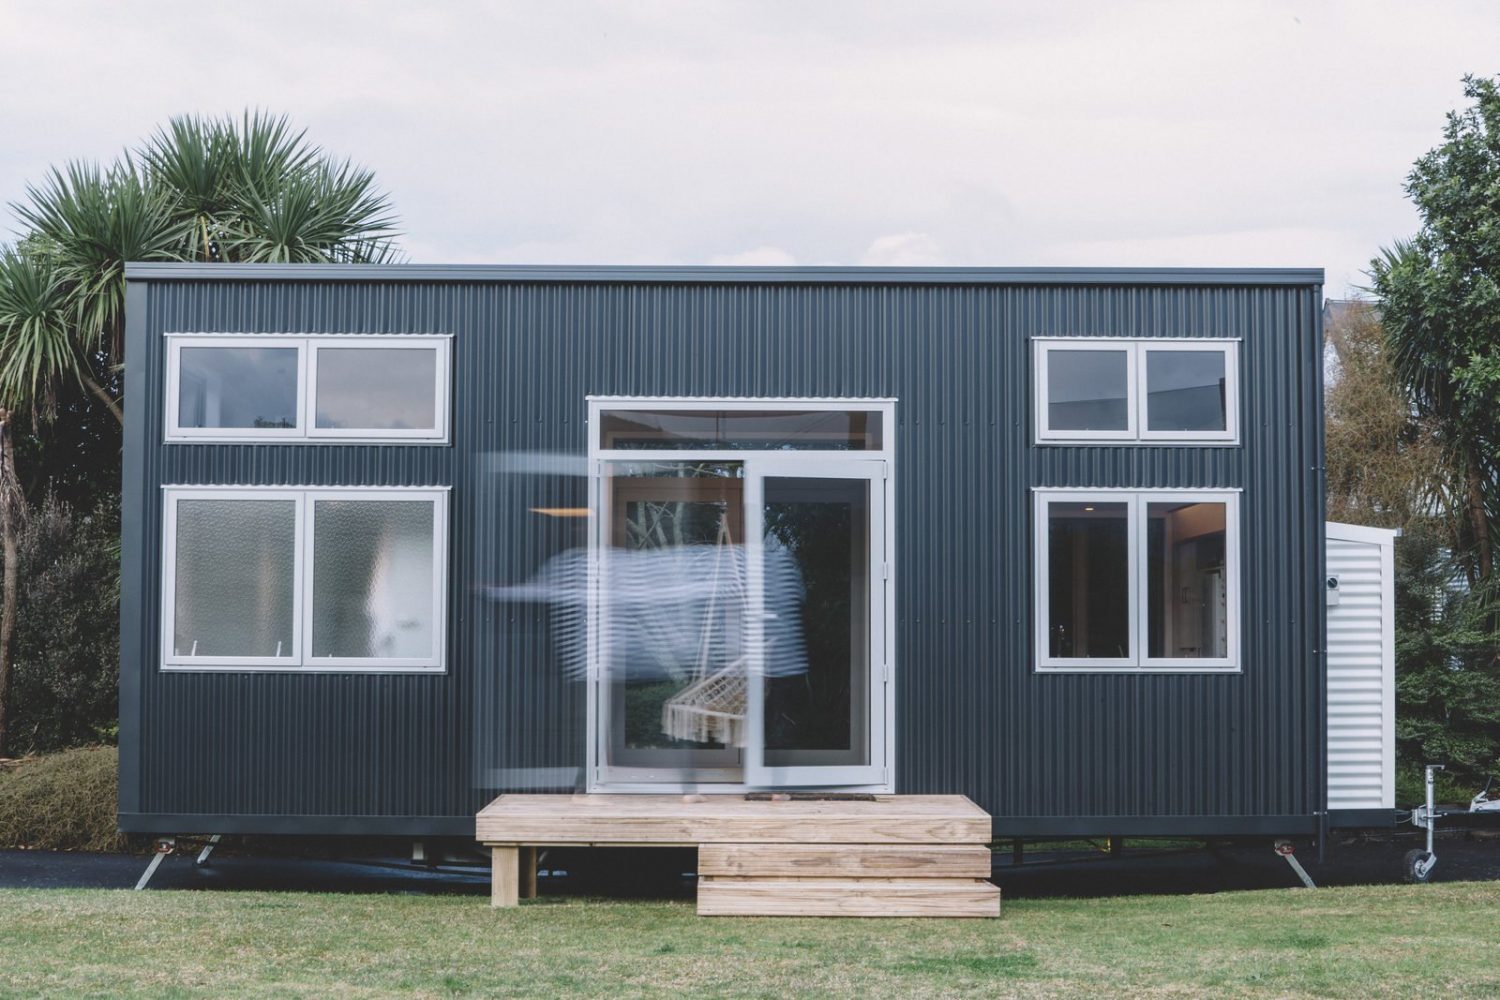 The Millennial Tiny House by Build Tiny